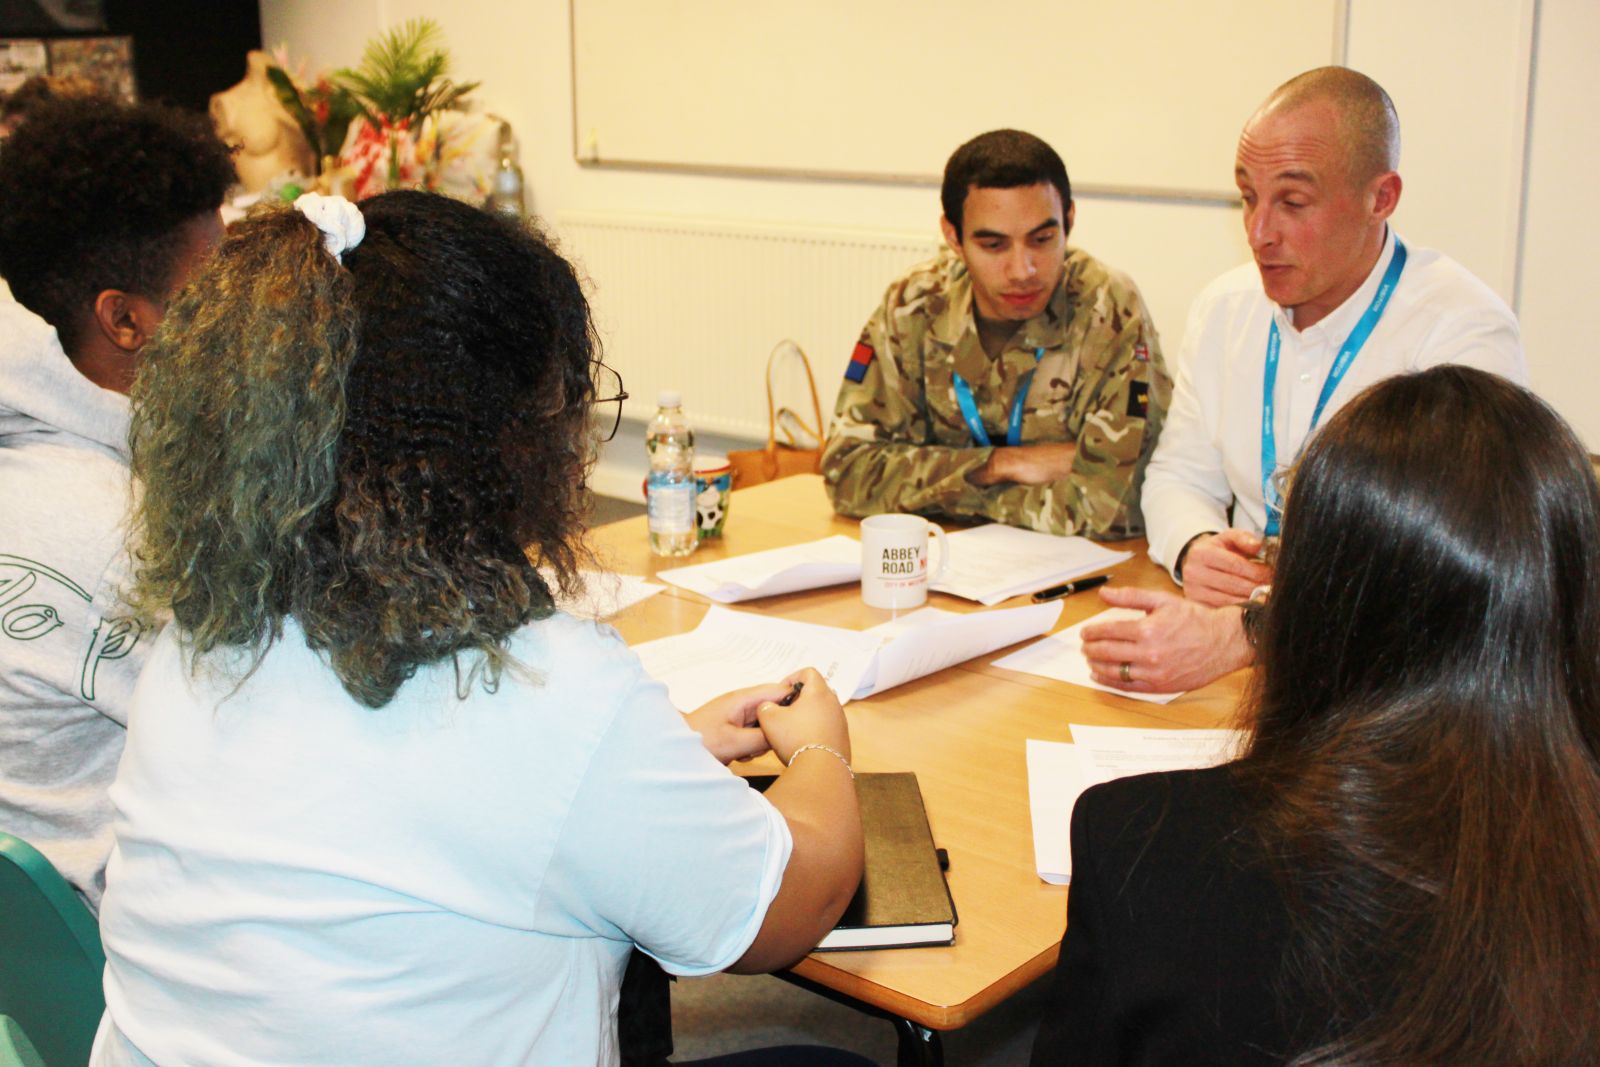 Creative art students talking to army representatives